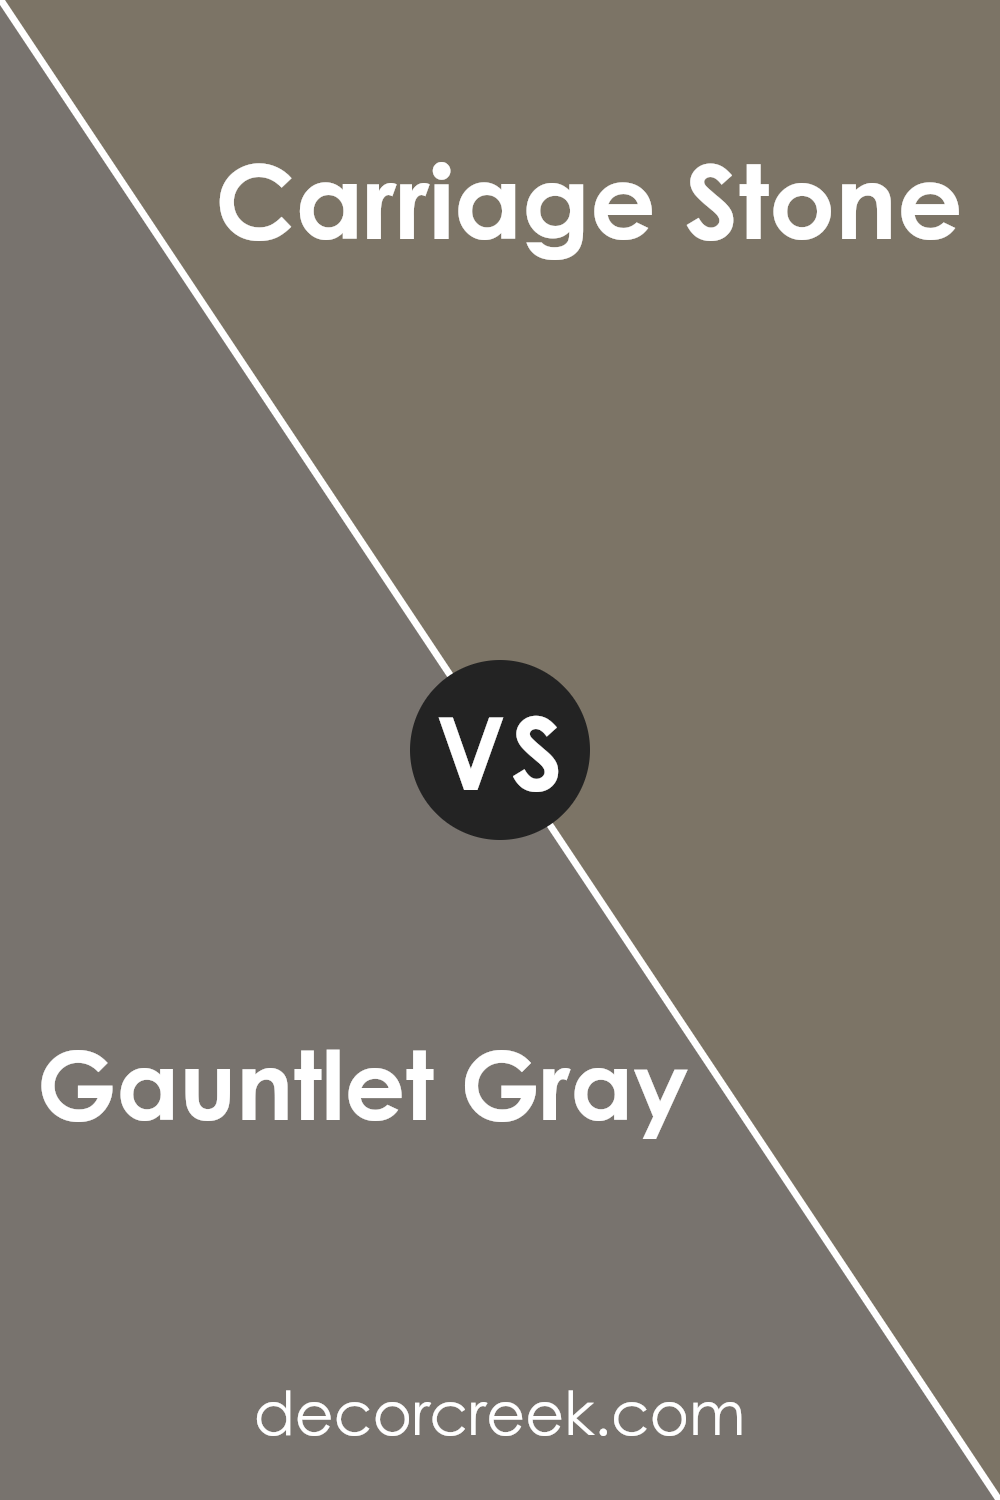 gauntlet_gray_sw_7019_vs_carriage_stone_sw_9614